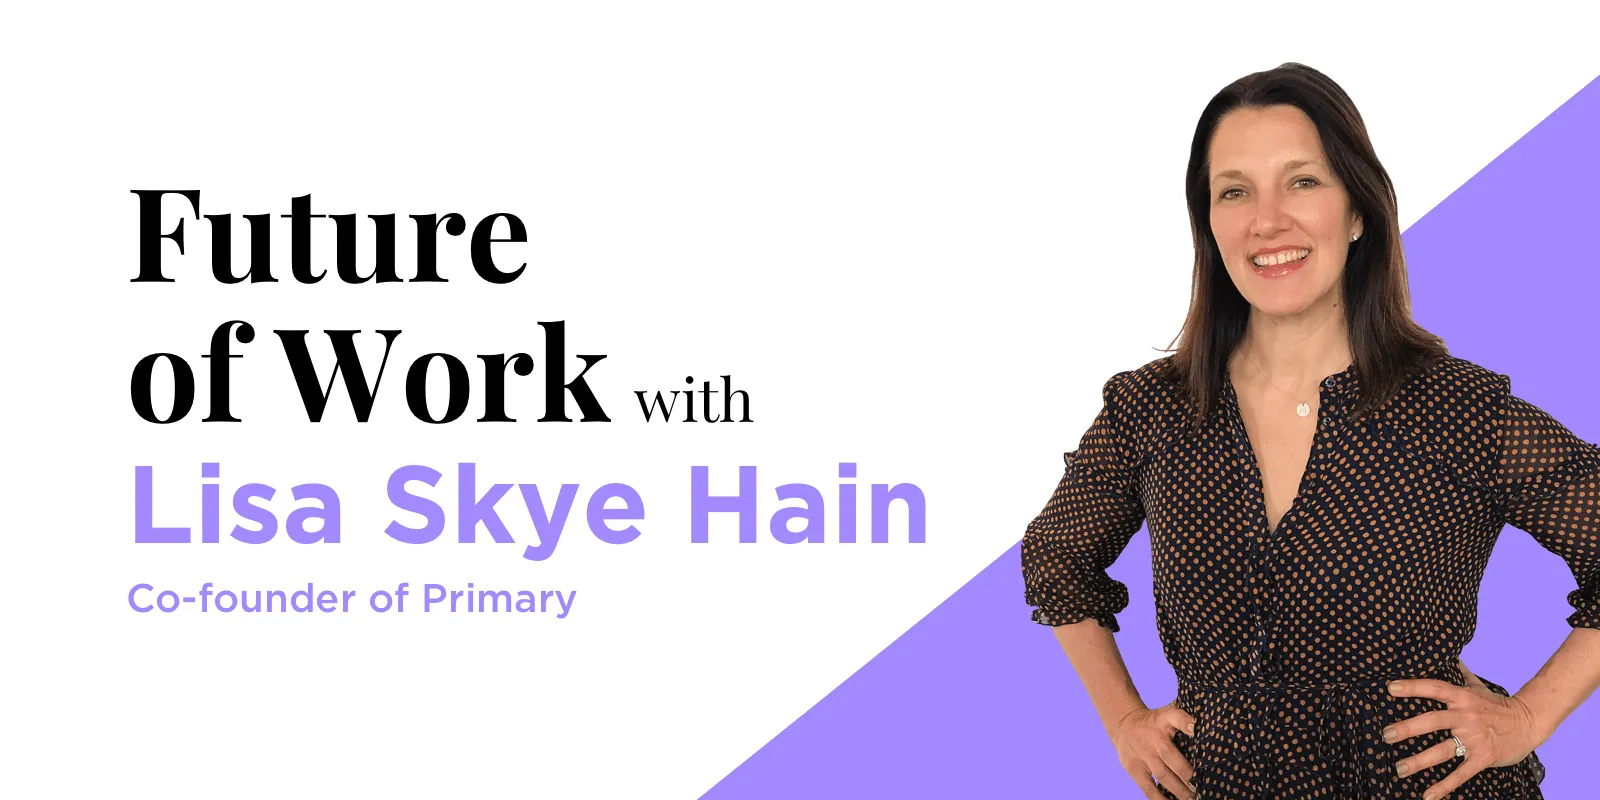 Future of Work with Lisa Skye Hain